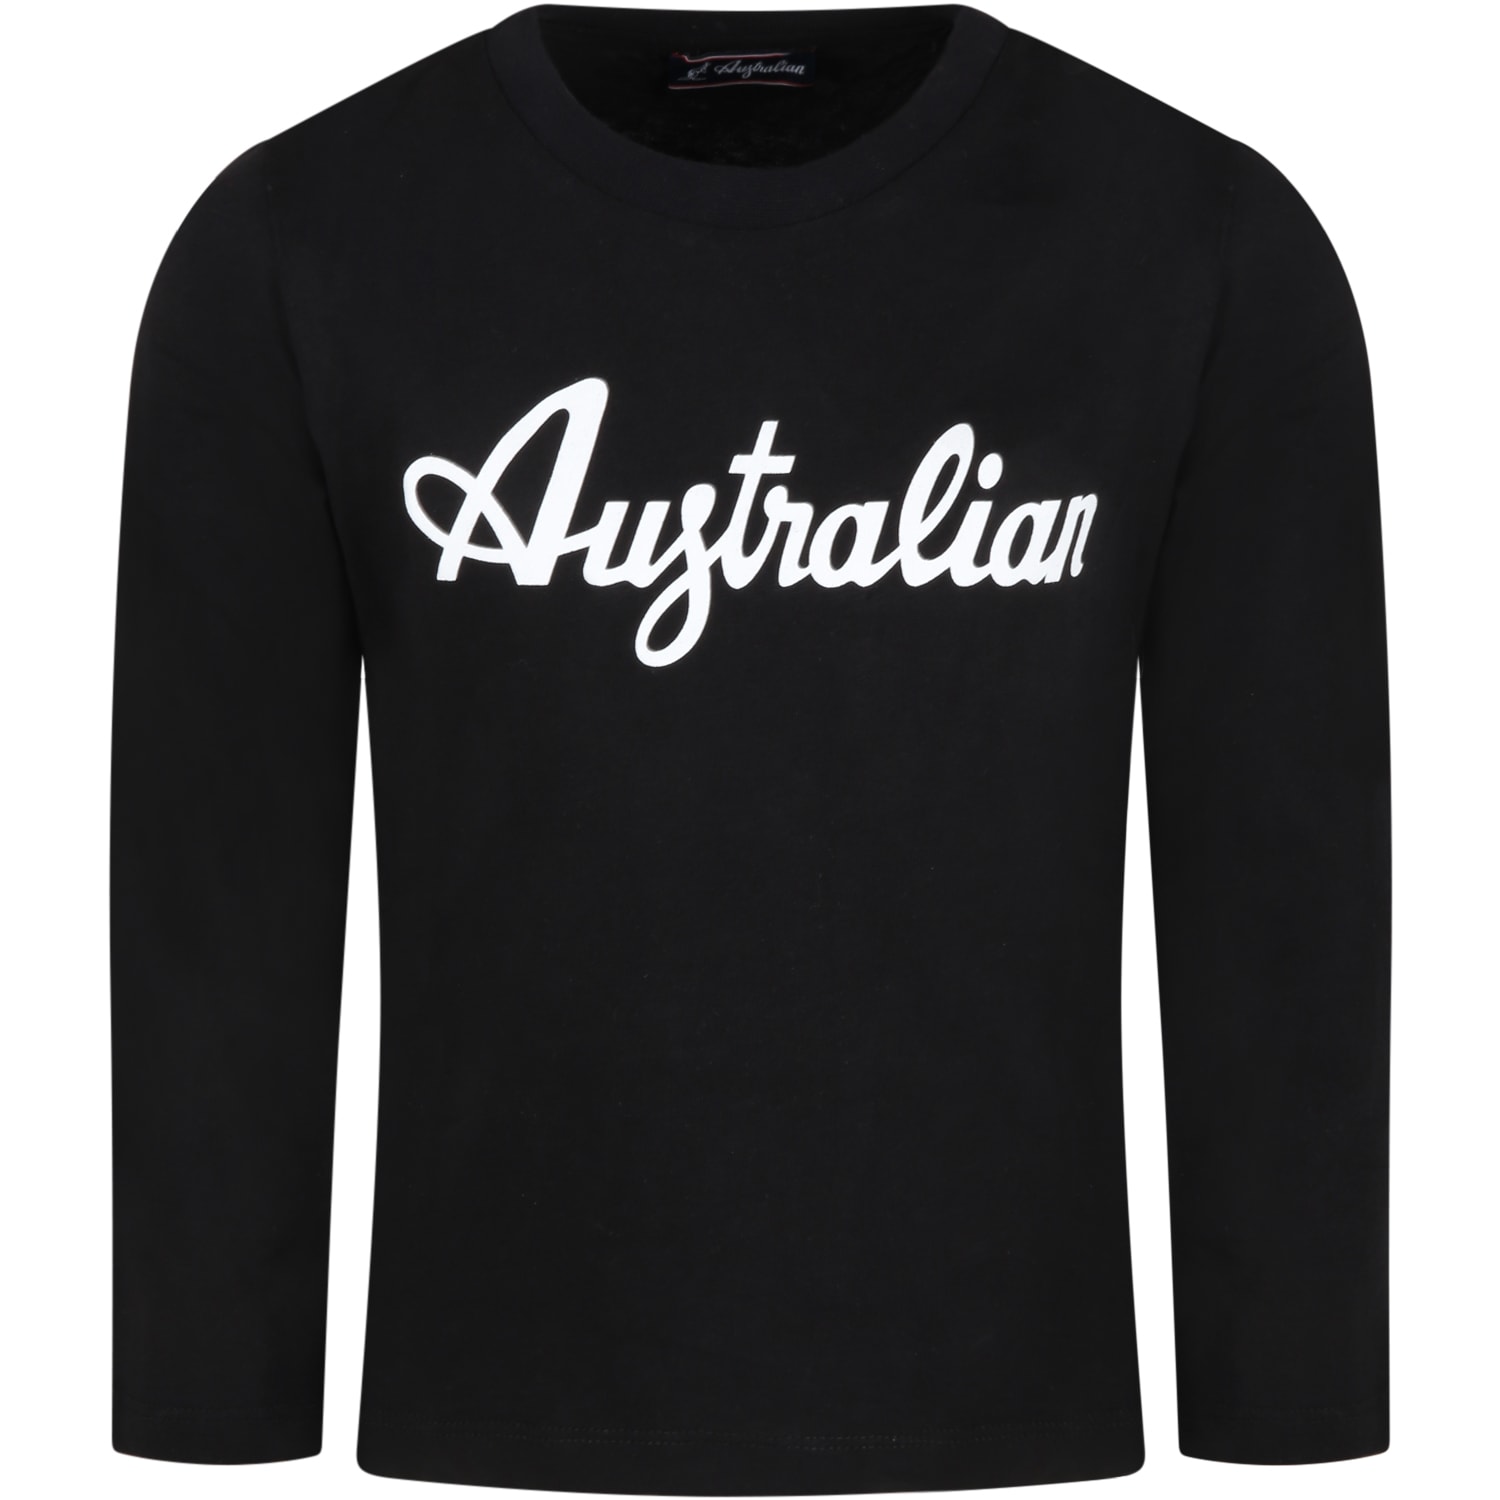 Australian Black T-shirt For Boy With Logo